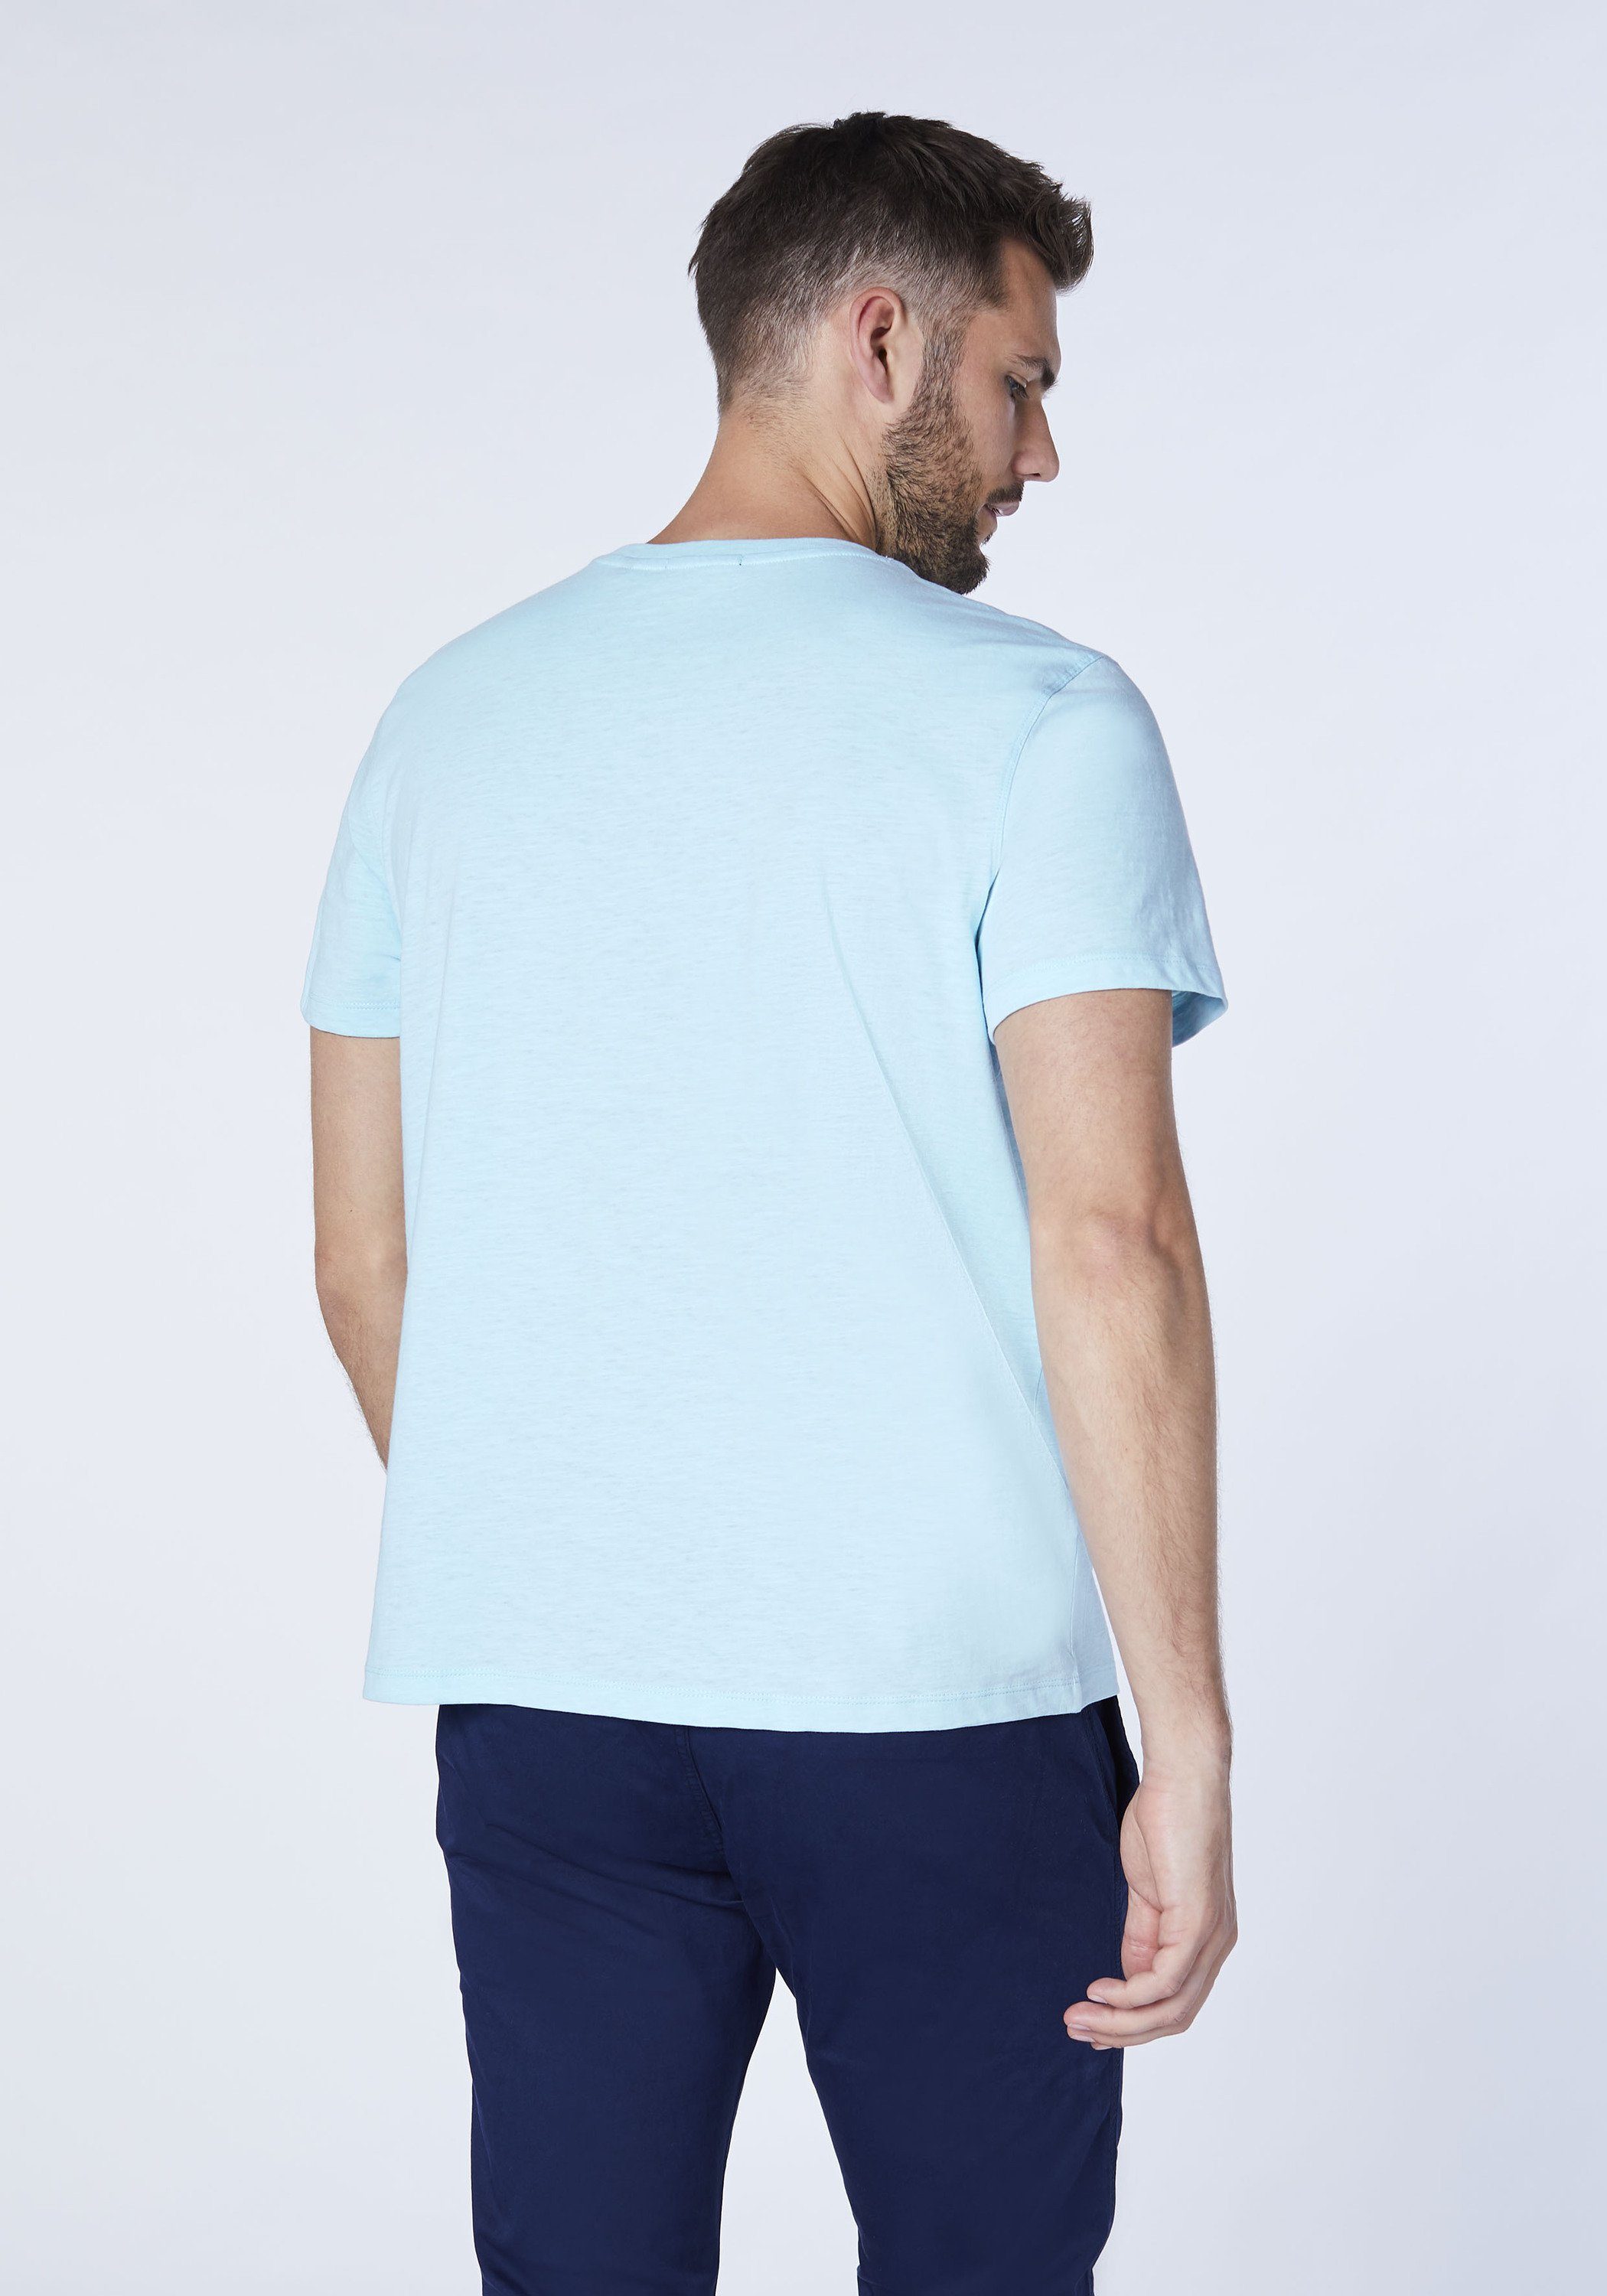 Label-Symbol Coryda Chiemsee T-Shirt gedrucktem Print-Shirt 1 mit Blue